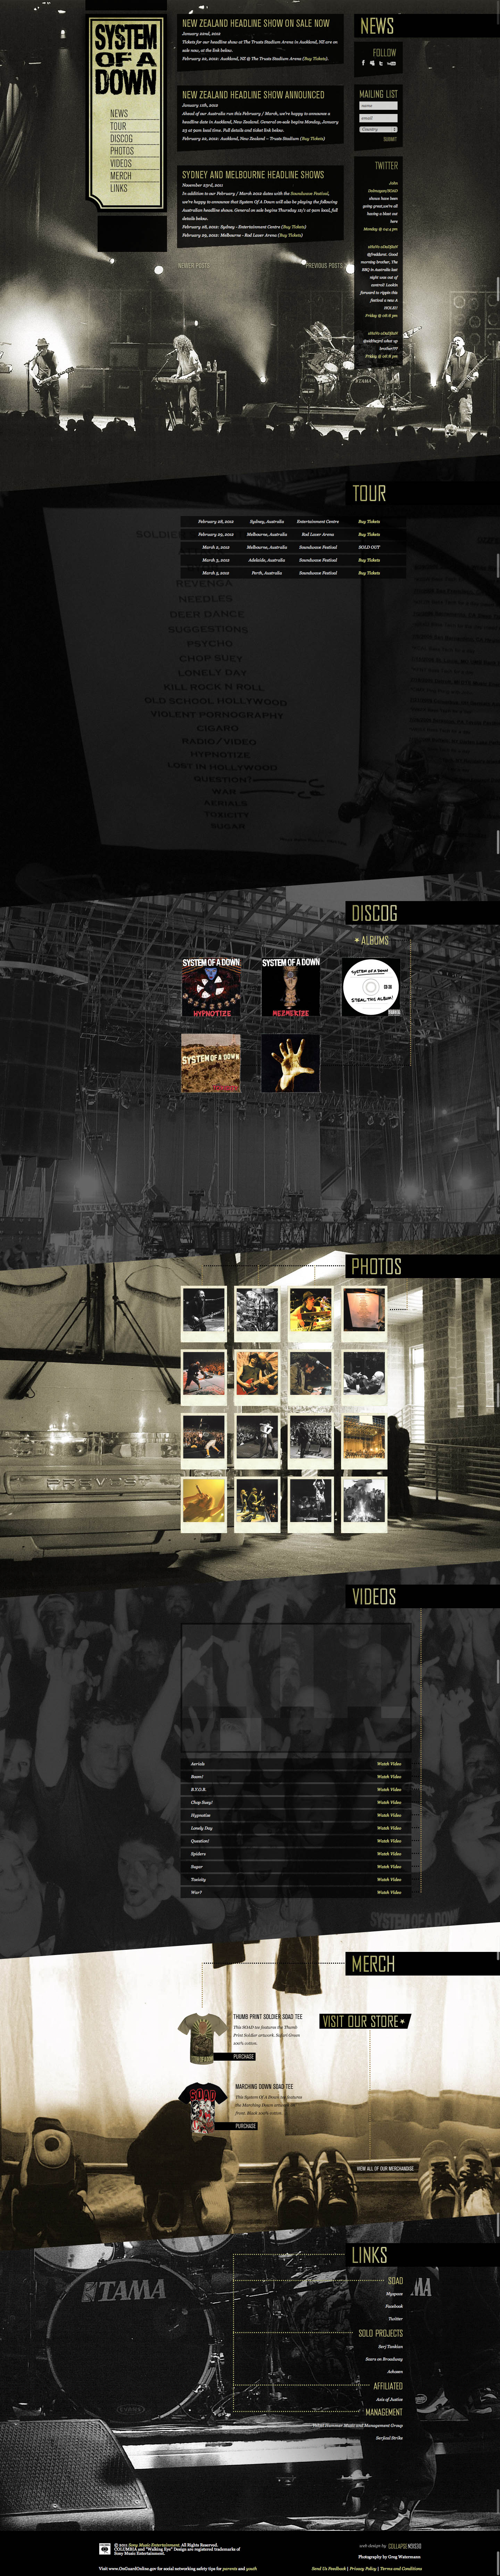 System Of A Down Website Screenshot